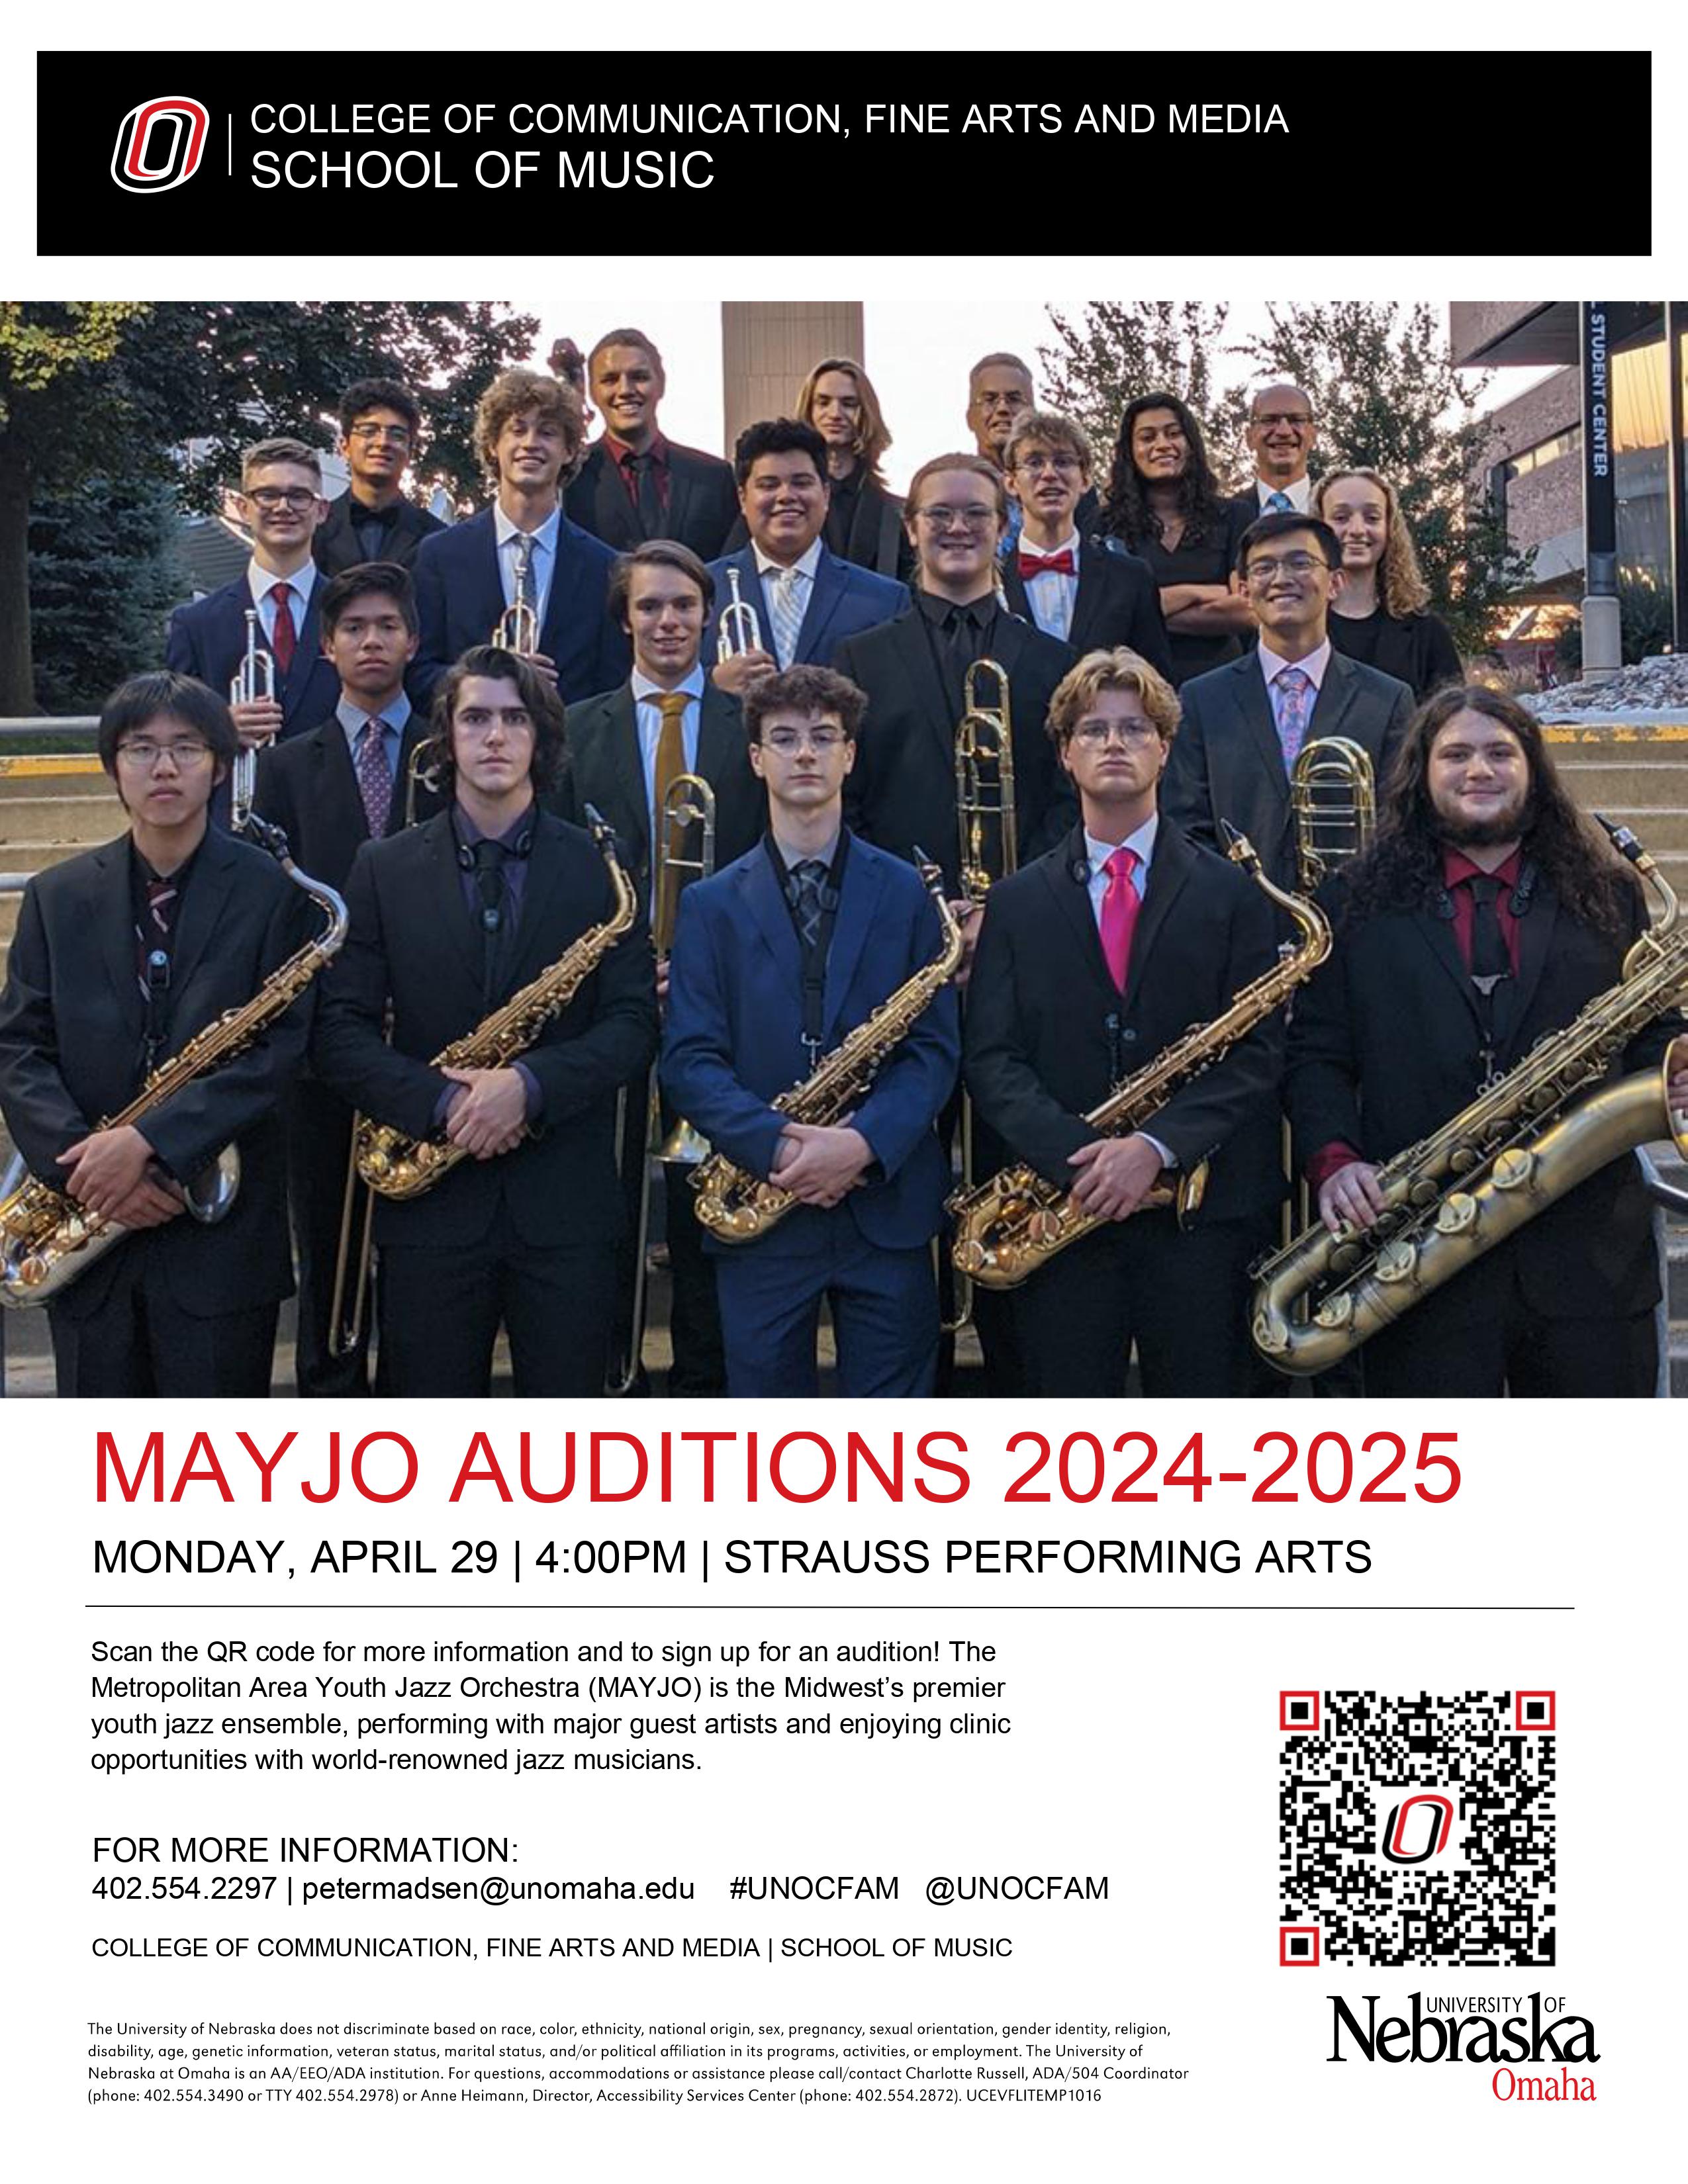 mayjo-auditions-2024_2025-print-version.jpg